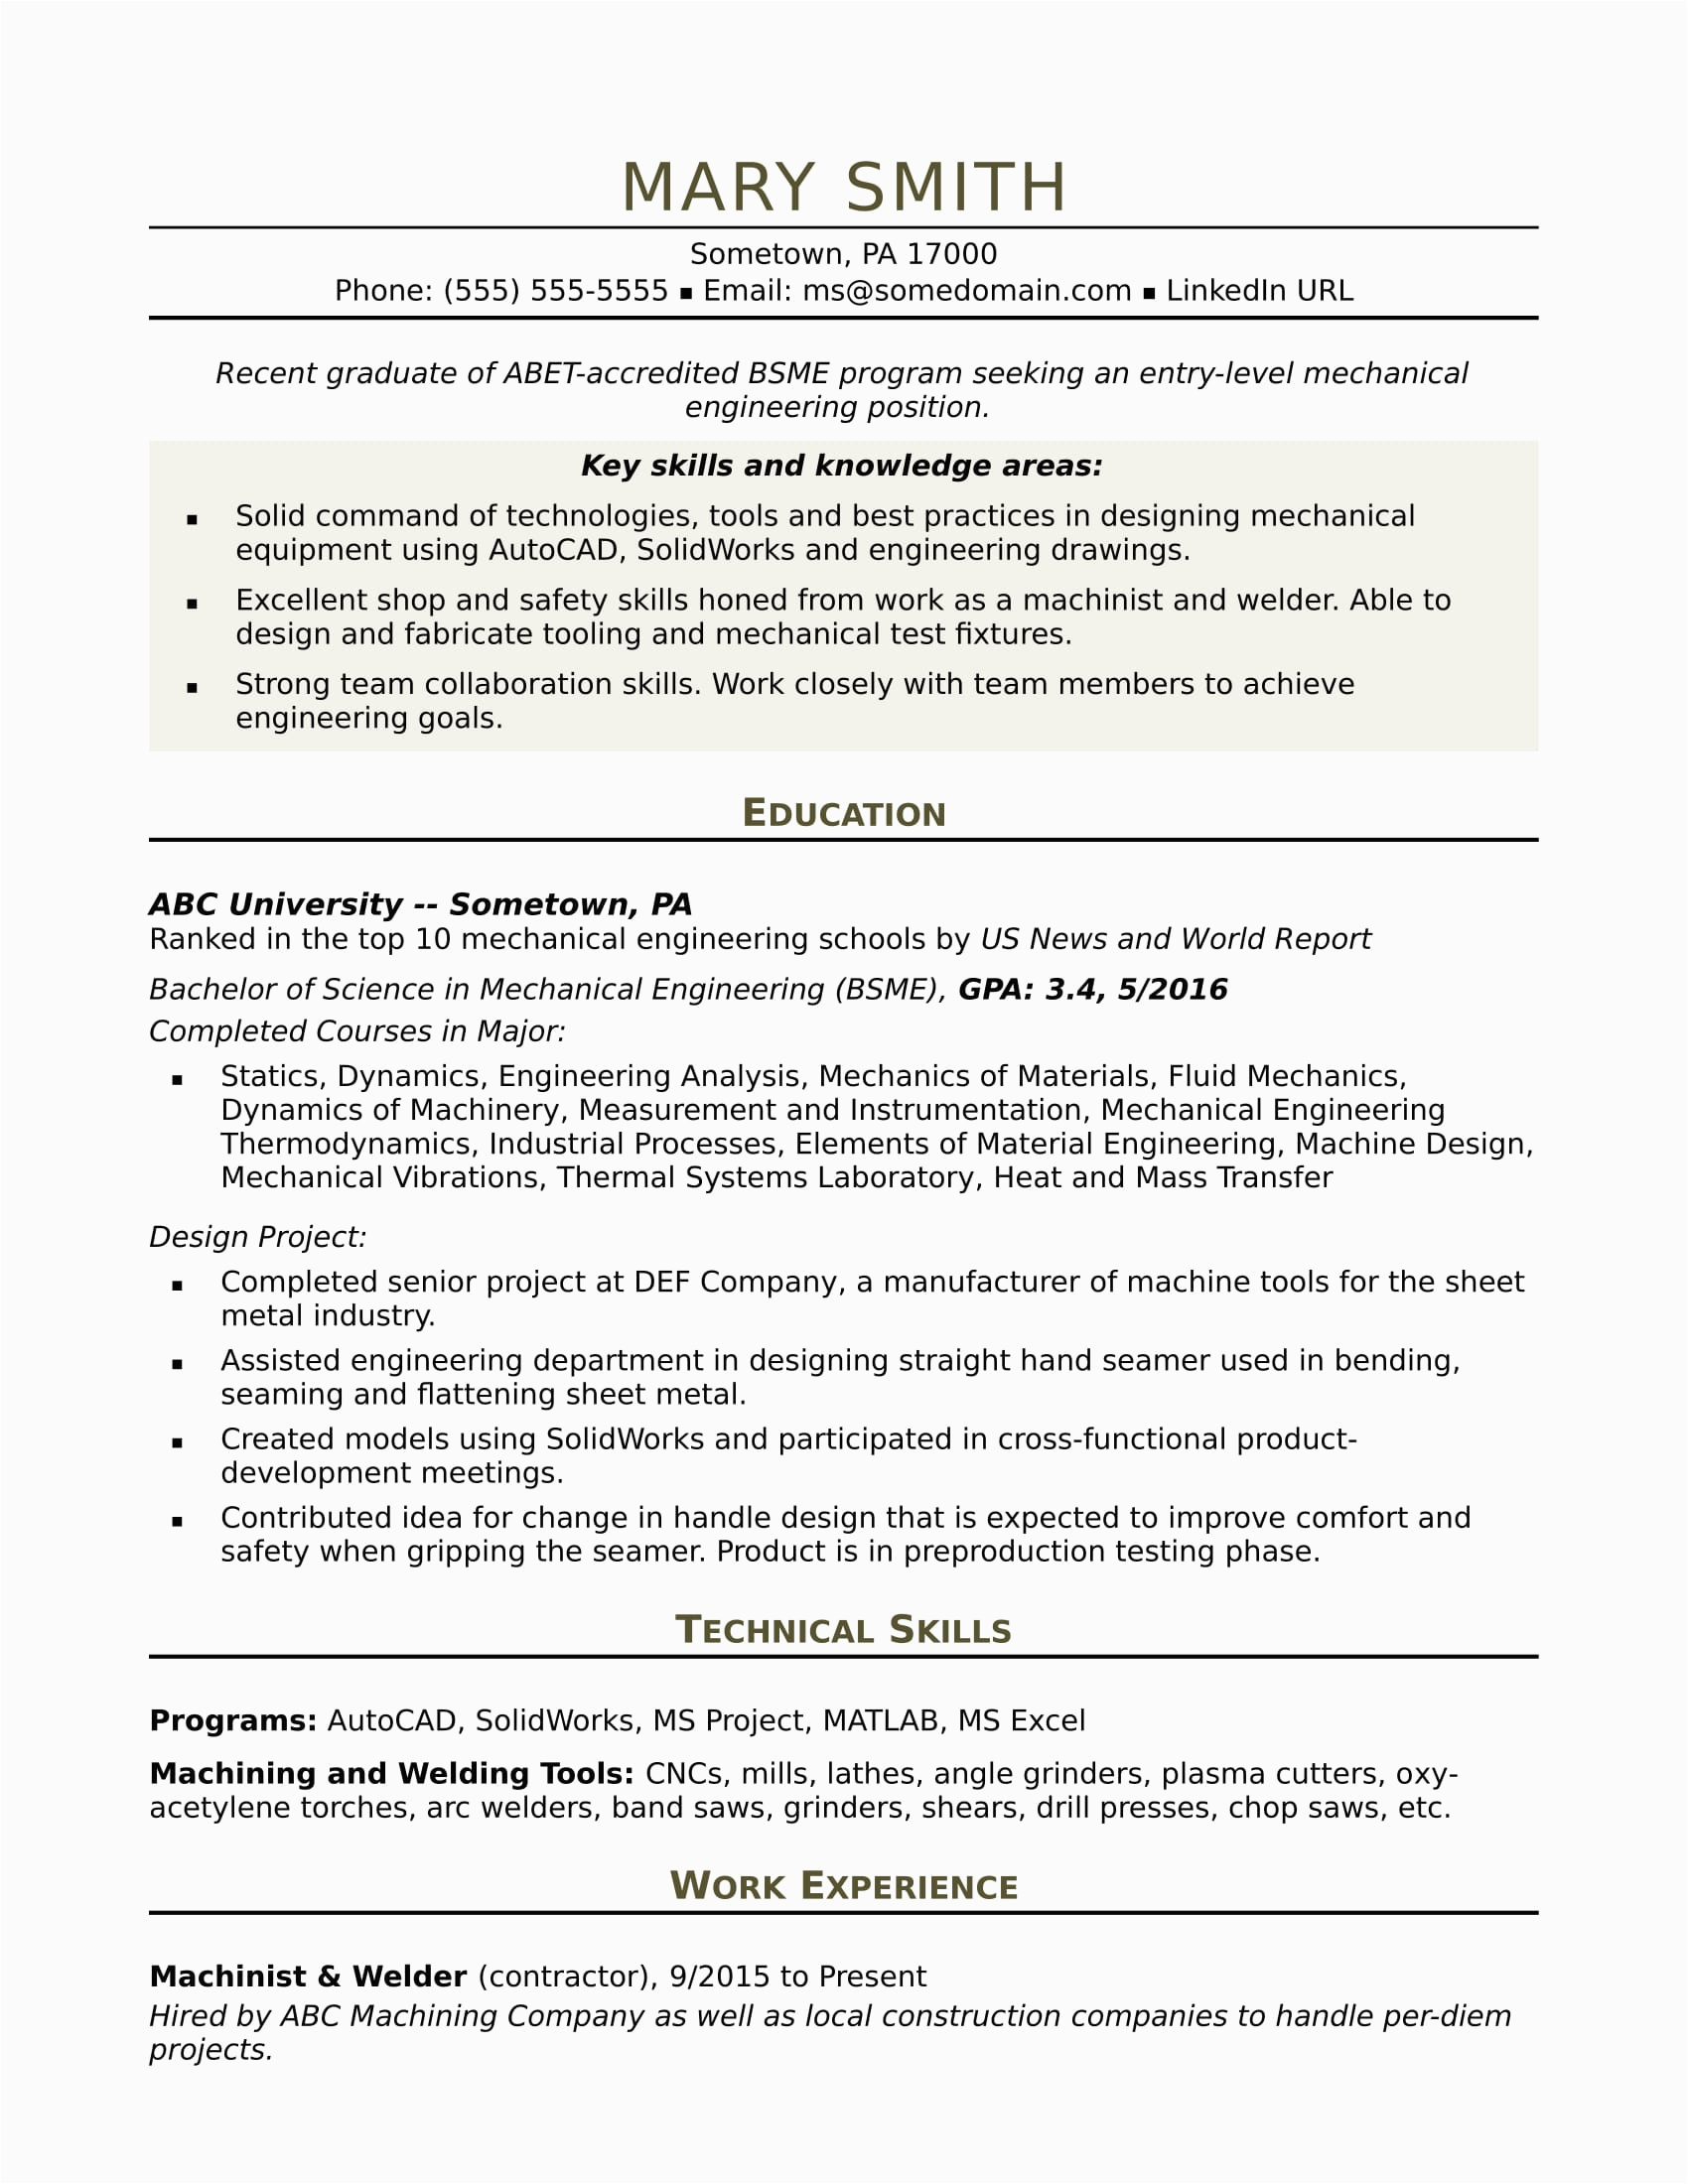 Sample Resume for Mechanical Engineer Fresh Graduate Pdf Sample Resume for An Entry Level Mechanical Engineer